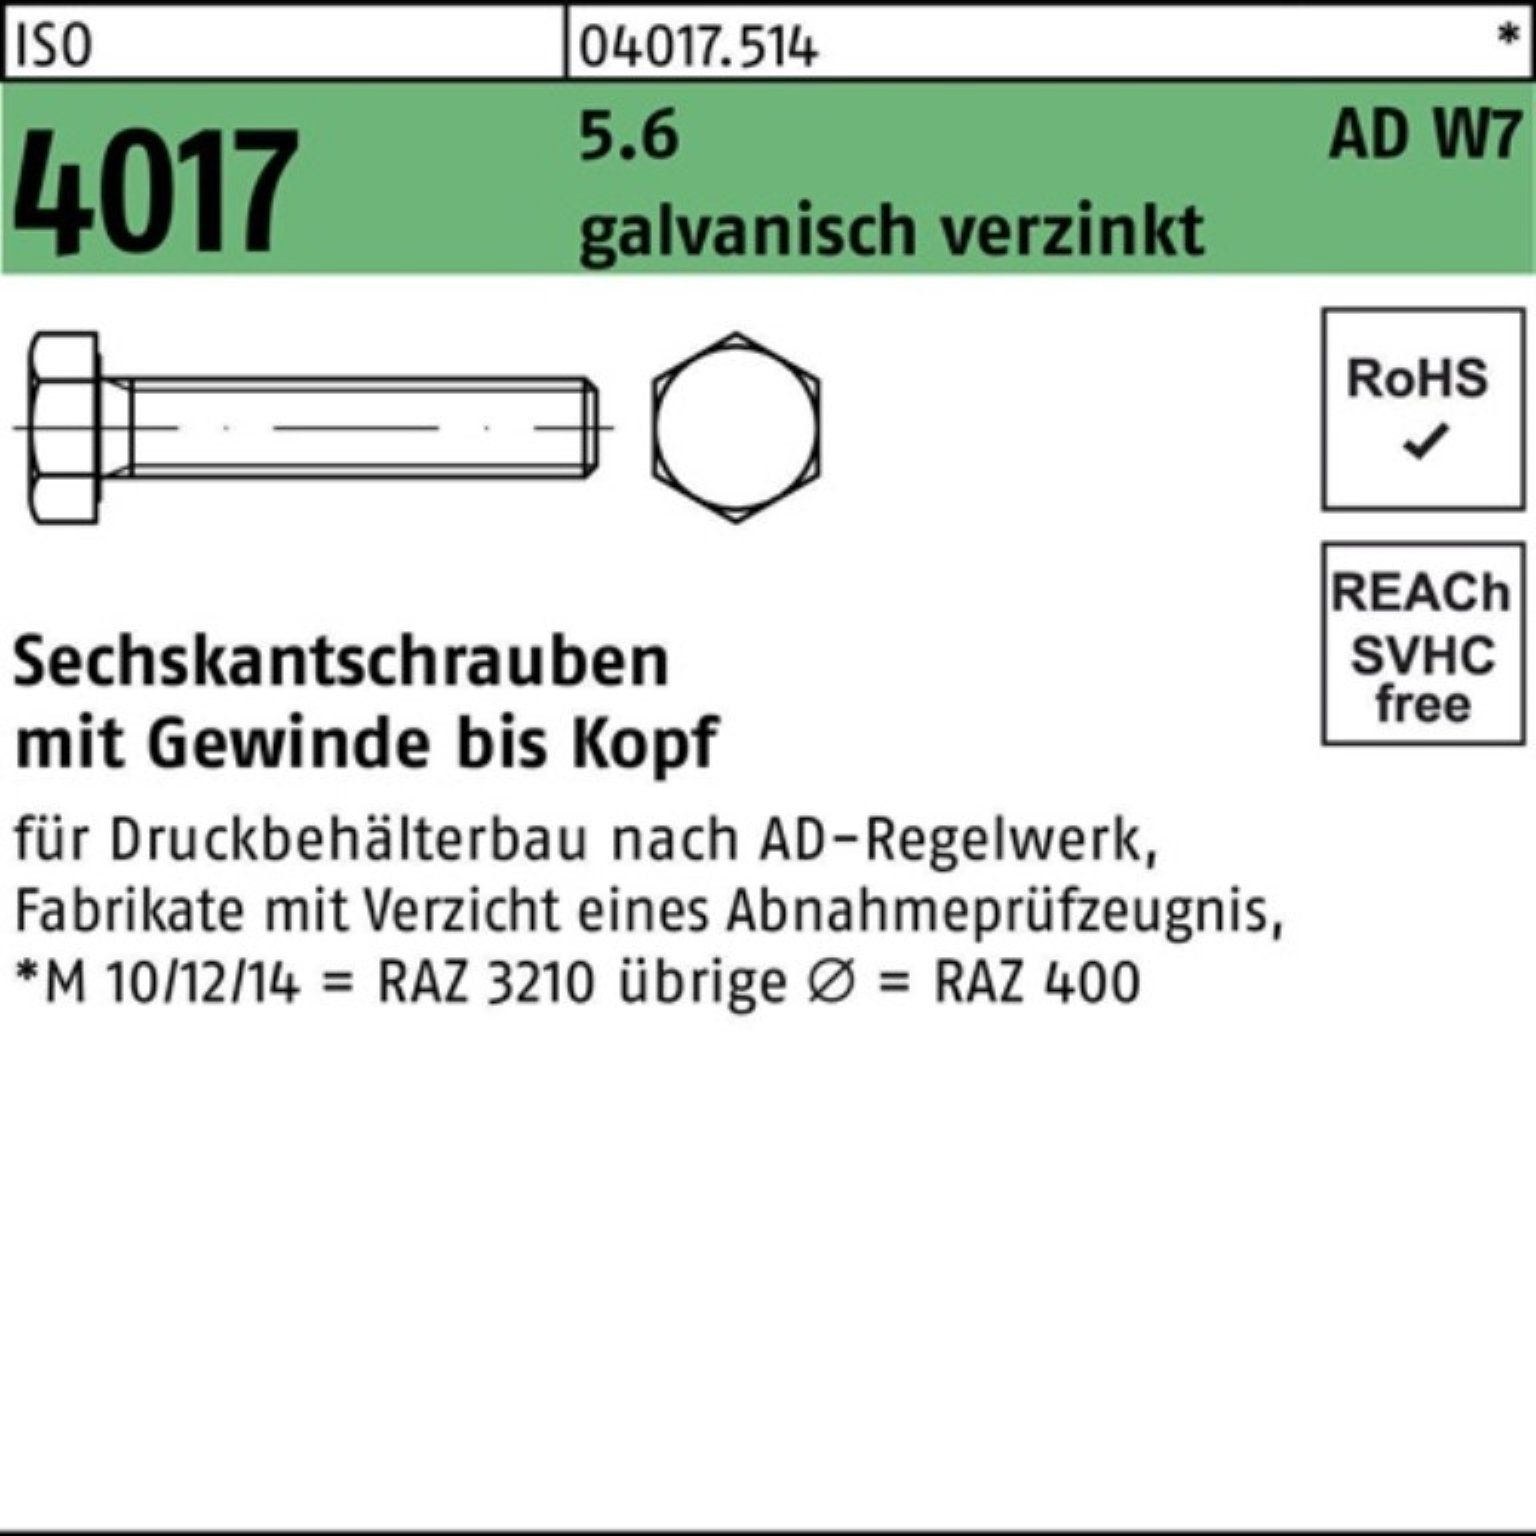 W7 Bufab AD Pack VG Sechskantschraube 5.6 galv.verz. 4017 100er 50 M16x ISO Sechskantschraube